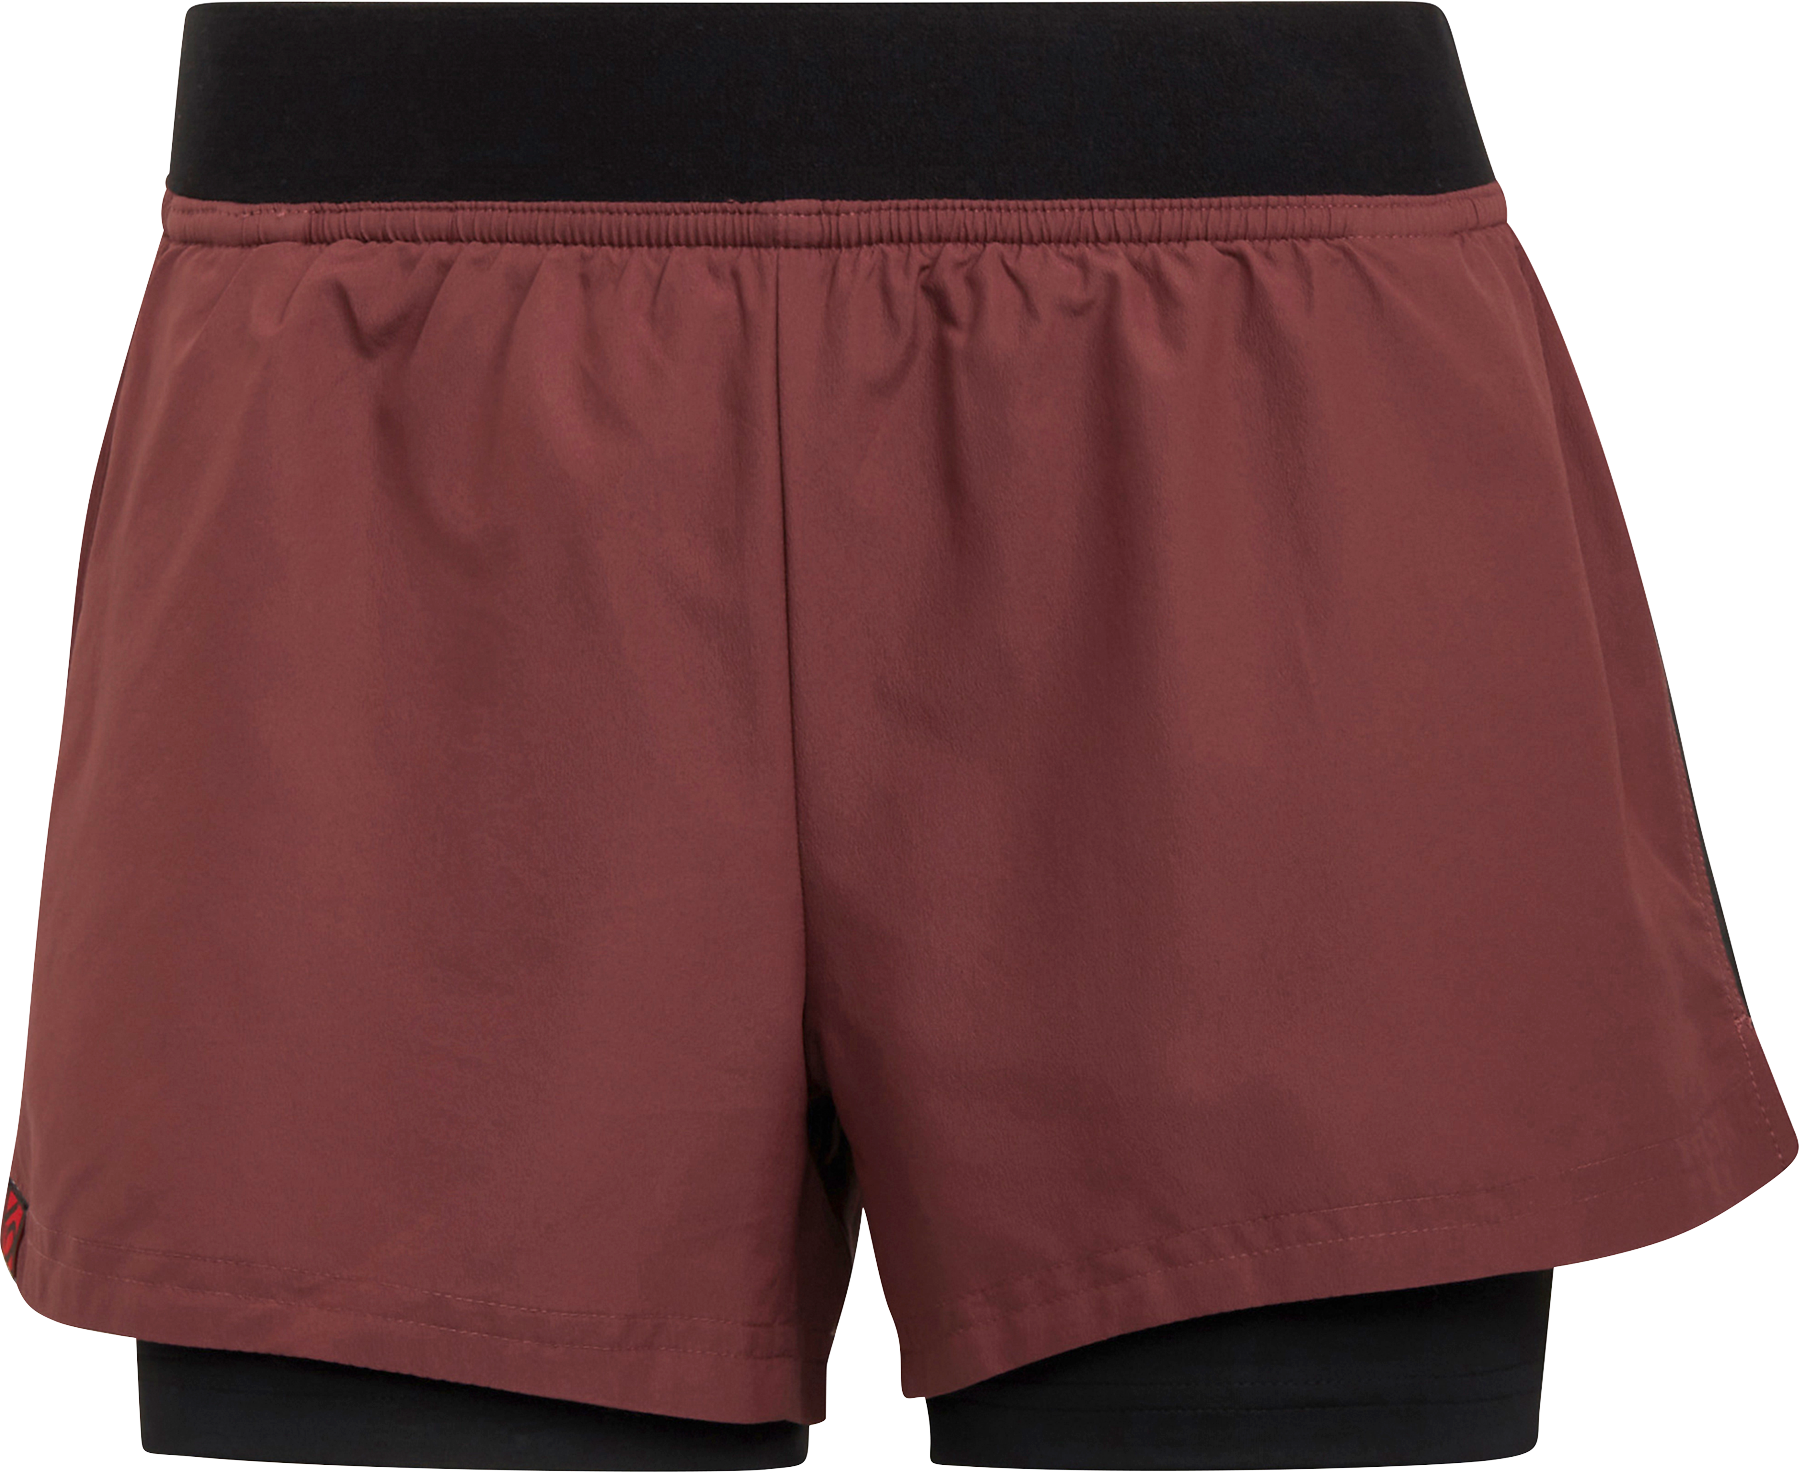 Women’s Two-in-One Climb Shorts Quiet Crimson/Black